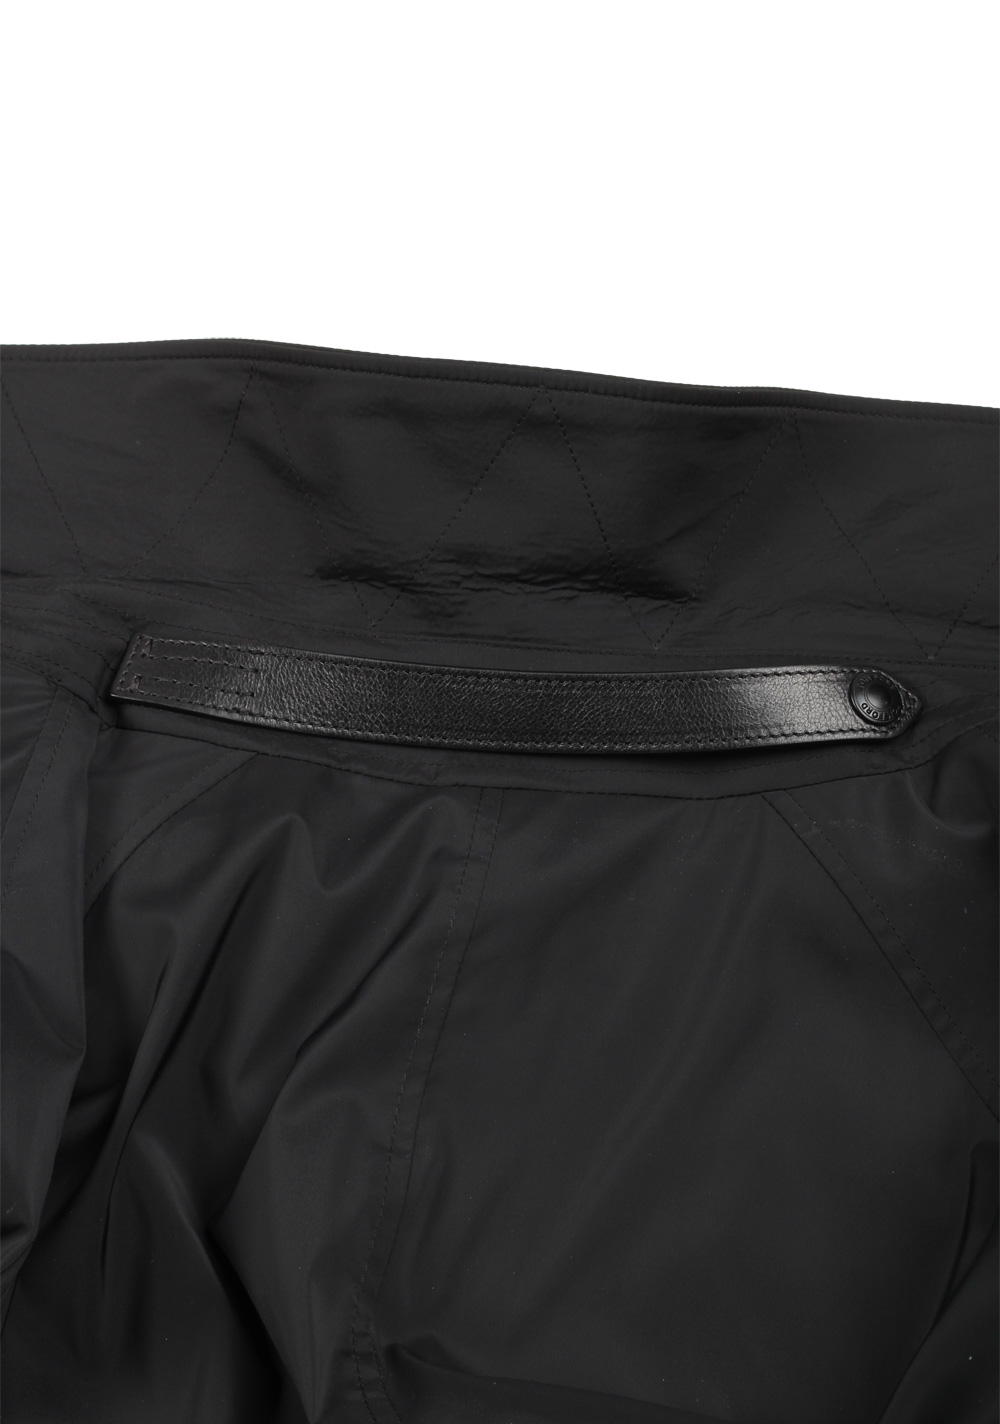 TOM FORD Black Over Rain Jacket Coat Size 50 / 40R U.S. Outerwear ...